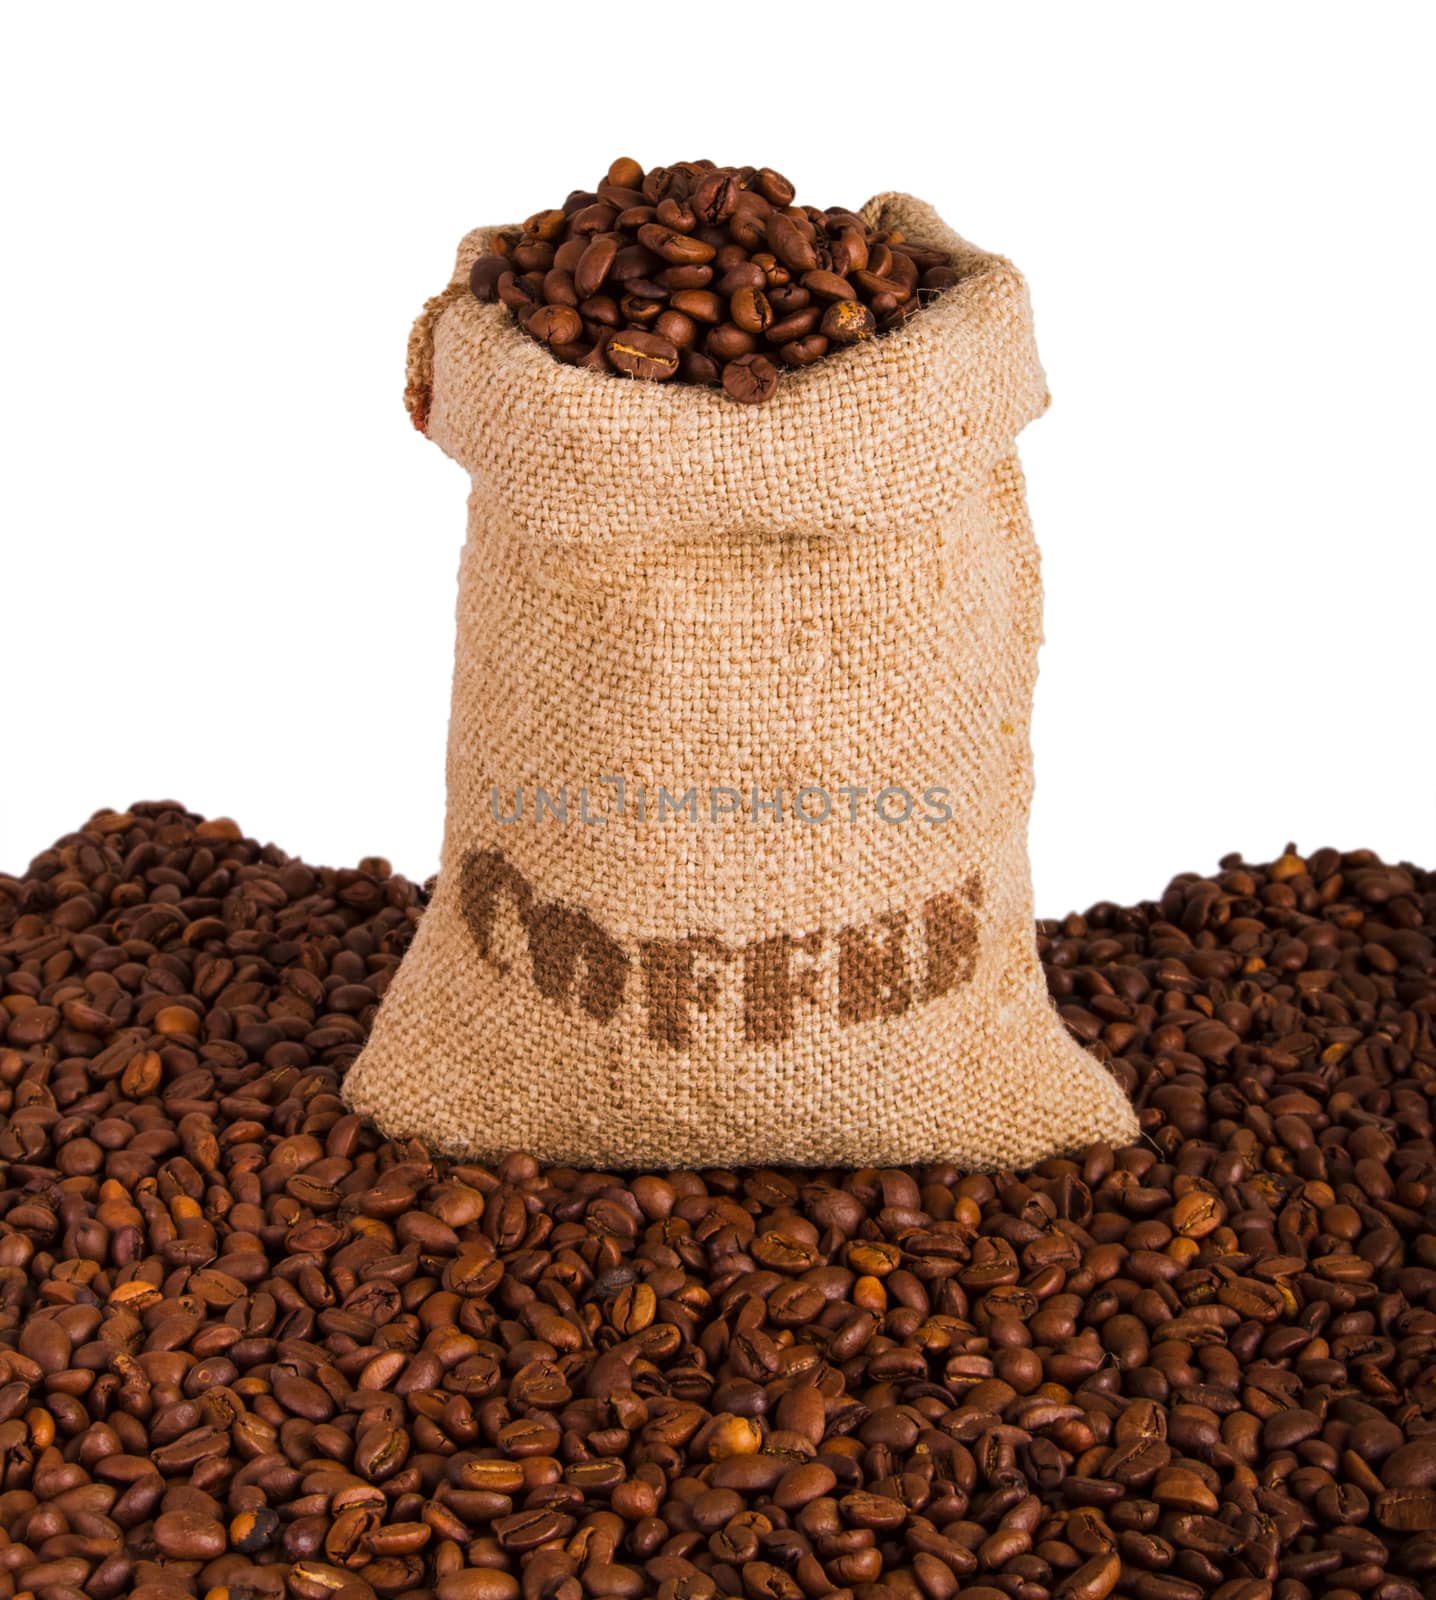 Burlap sack of coffee beans by grigorenko